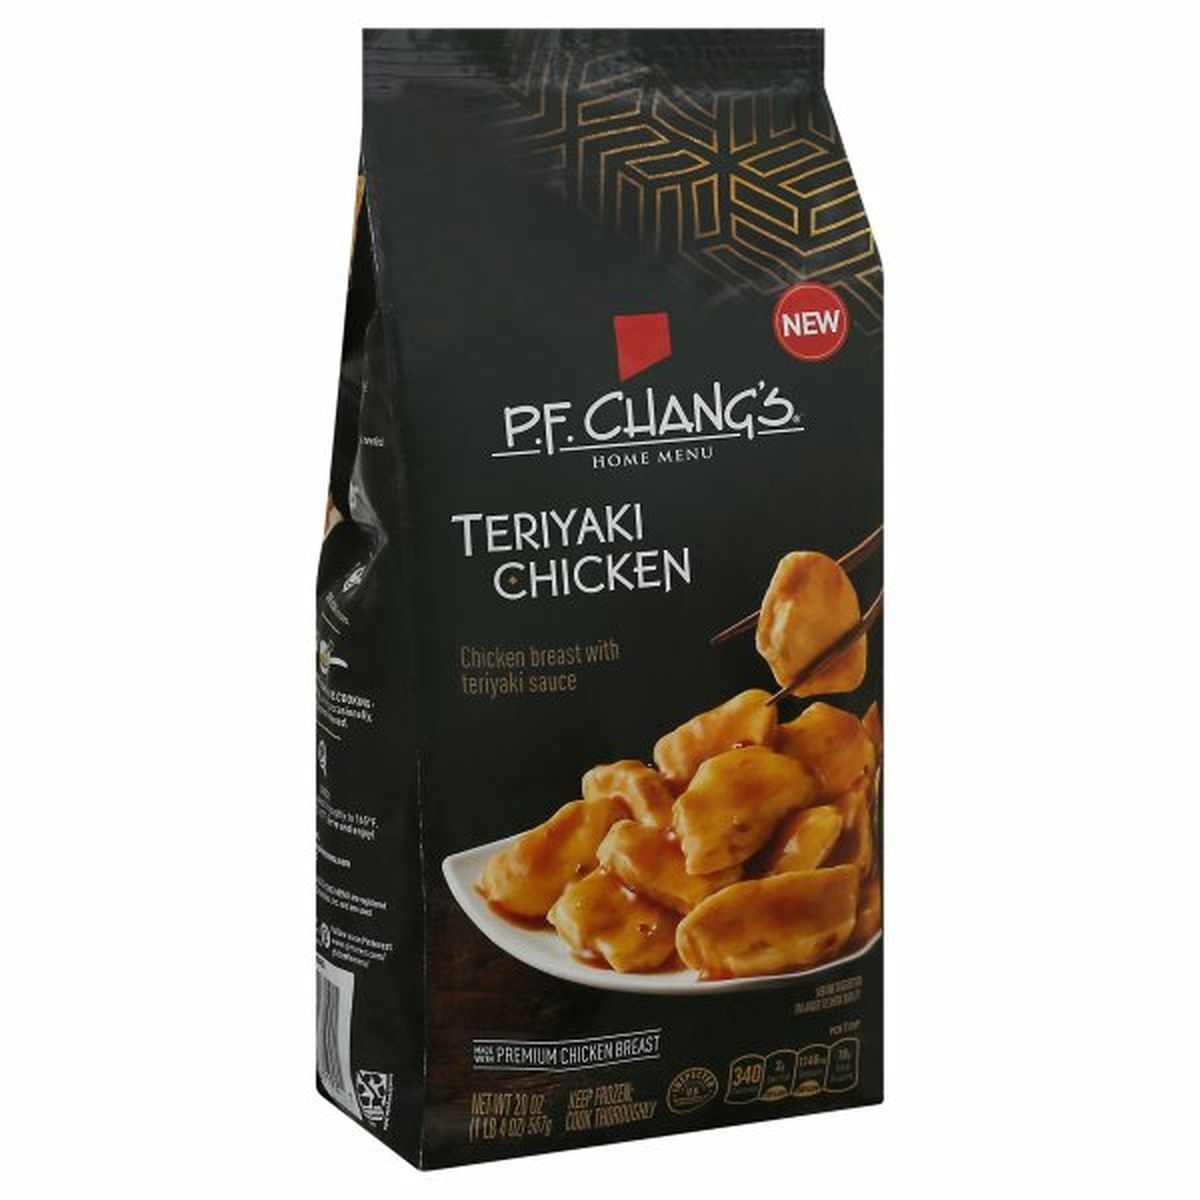 Calories in P.F. Chang's Home Menu Teriyaki Chicken